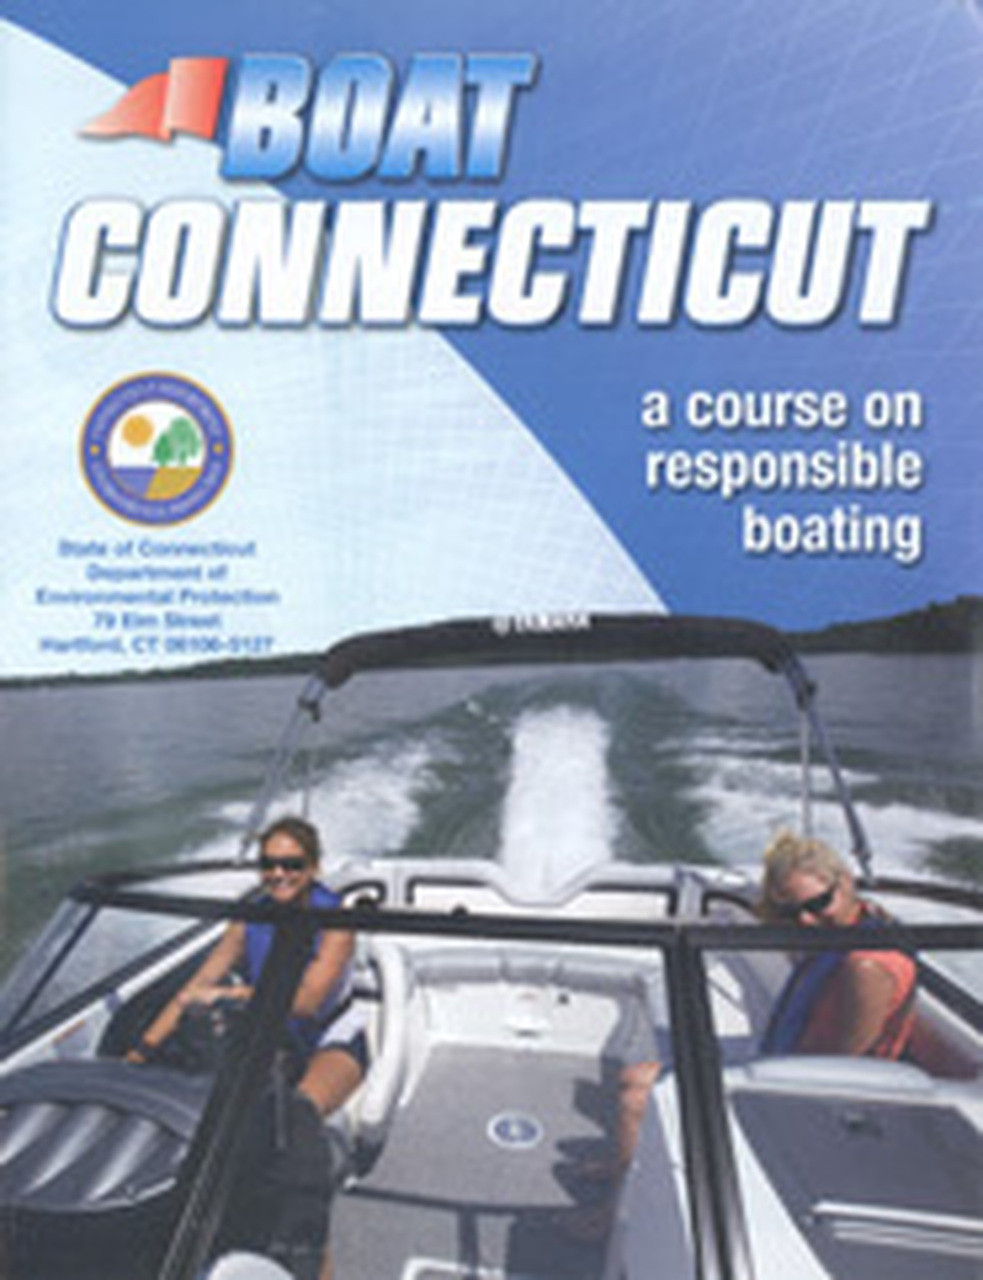 CT Boating & PWC Class, June 11, 2023, 10AM-6PM in E. Hartford, CT